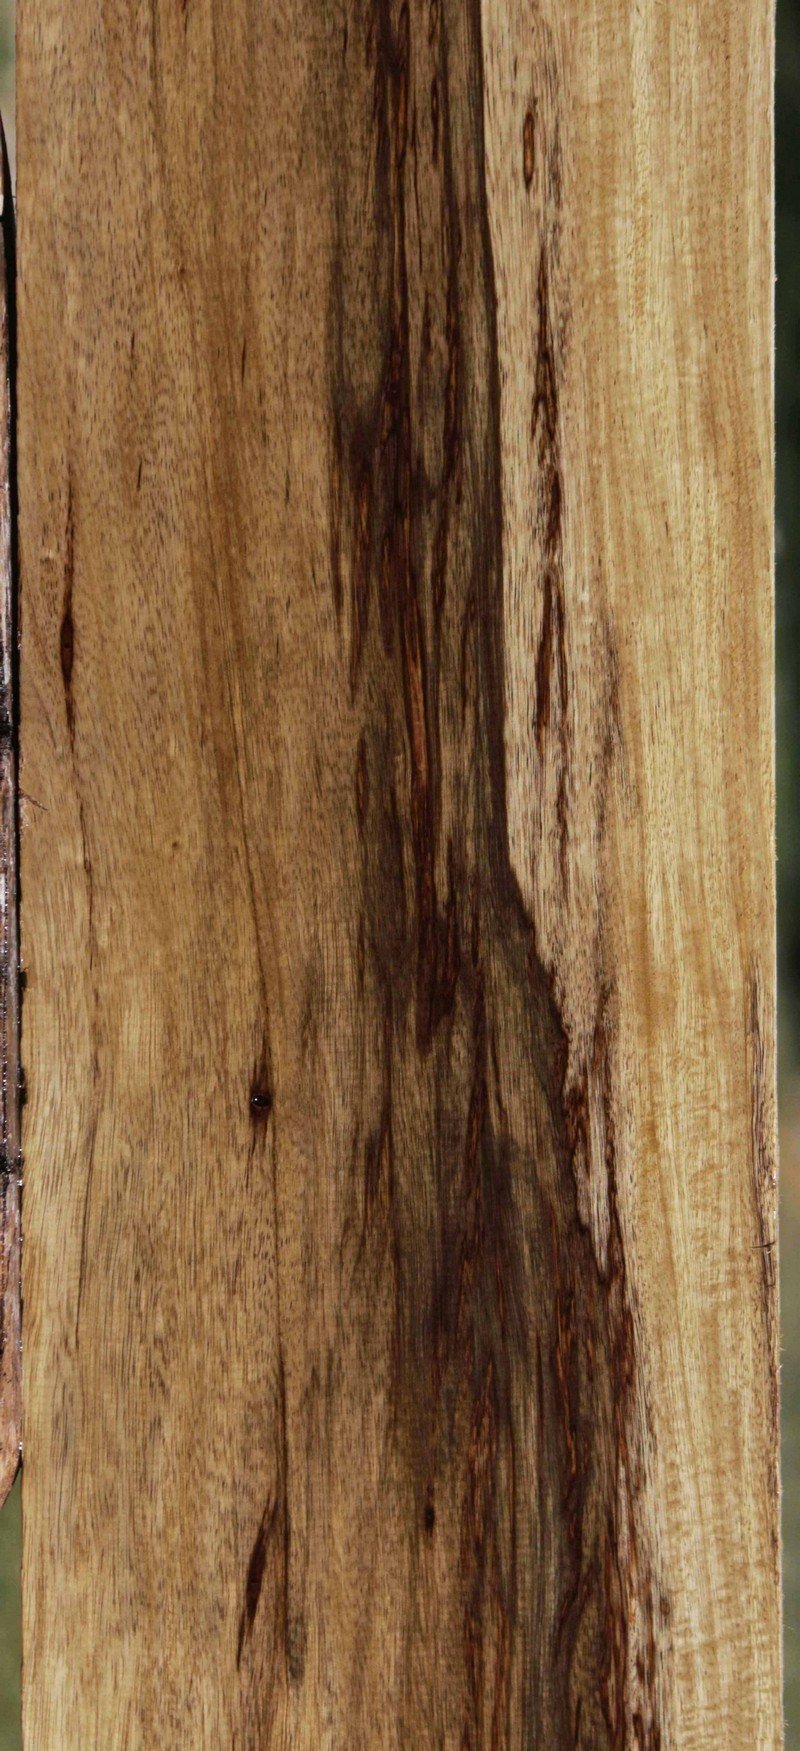 Black Limba Lumber